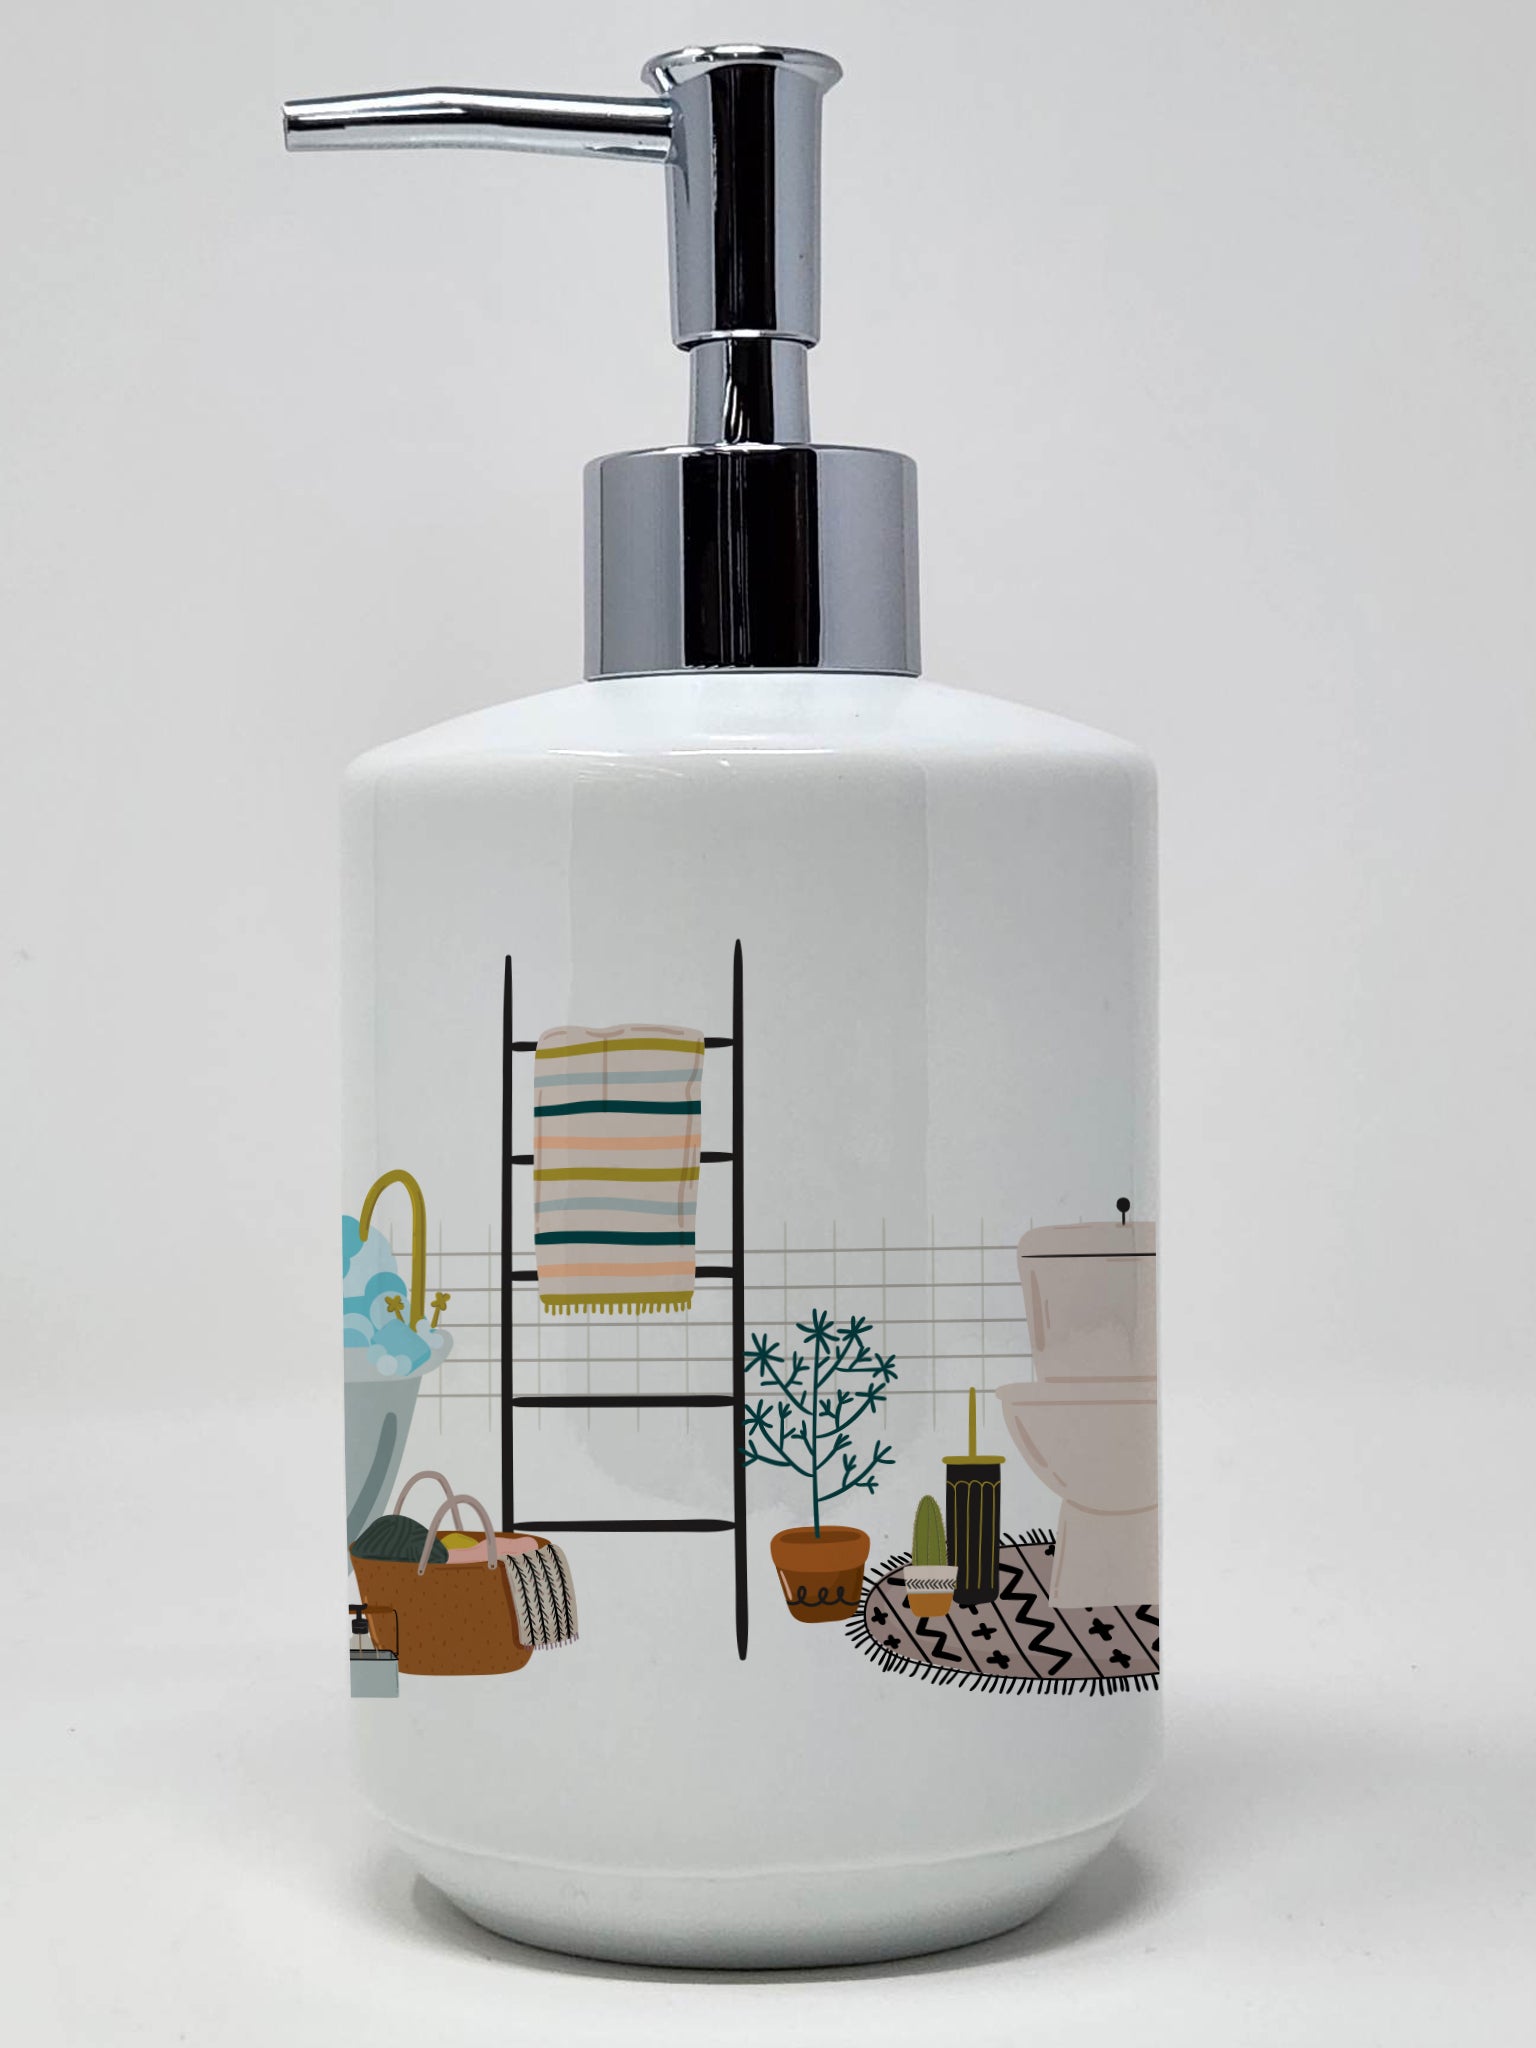 Buy this Irish Water Spaniel in Bathtub Ceramic Soap Dispenser